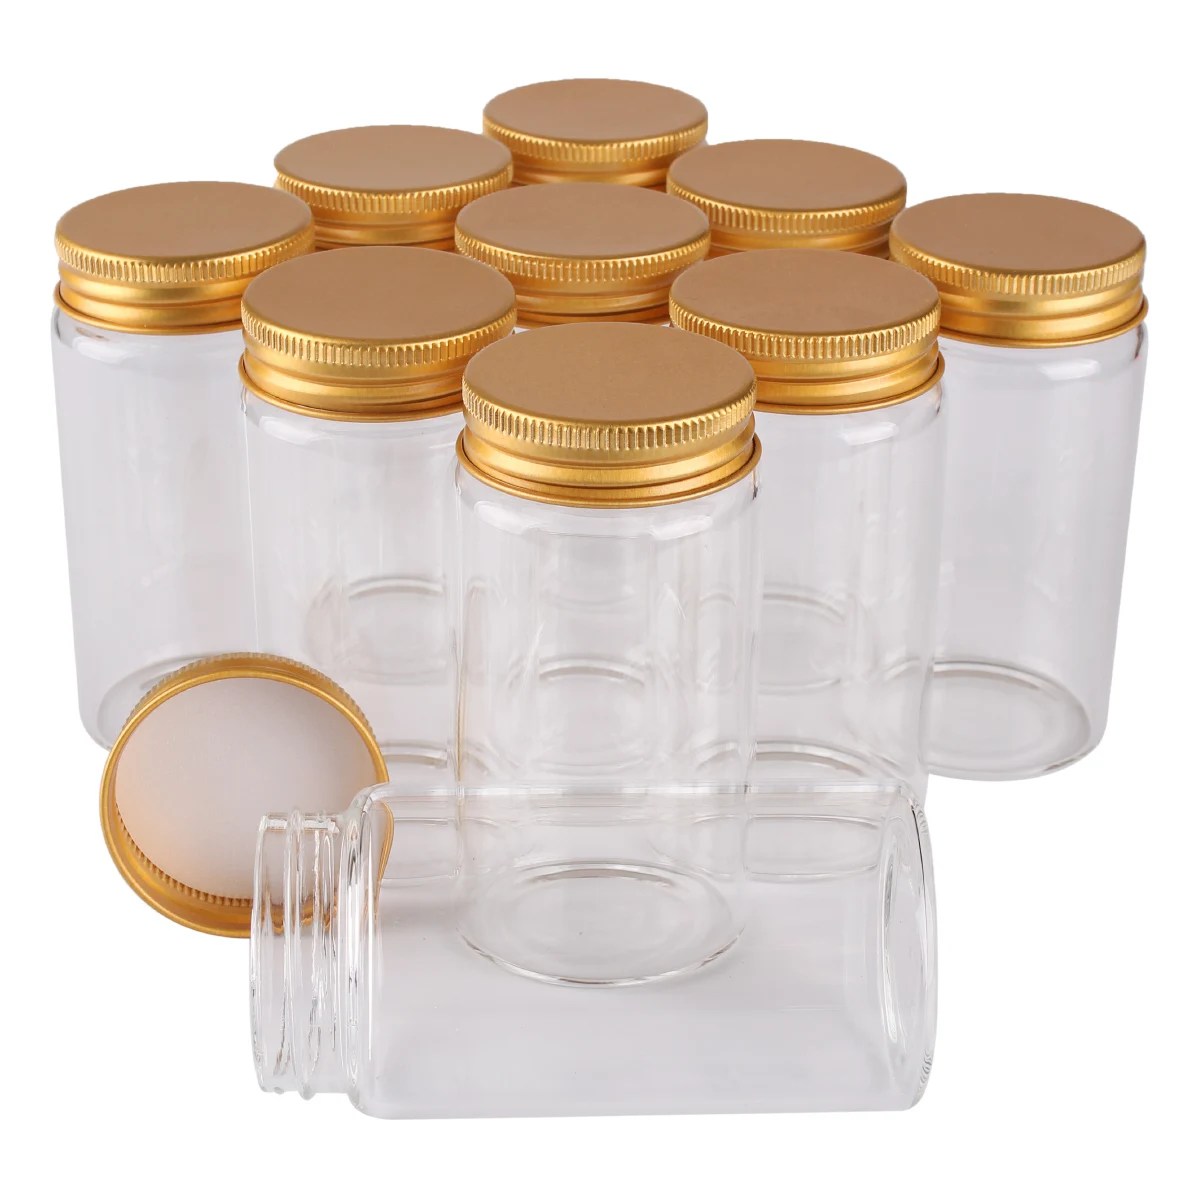 Botellas de vidrio con tapas de aluminio dorado, recipientes vacíos de vidrio para manualidades artísticas, 120ml, 47x90mm, 50 unidades